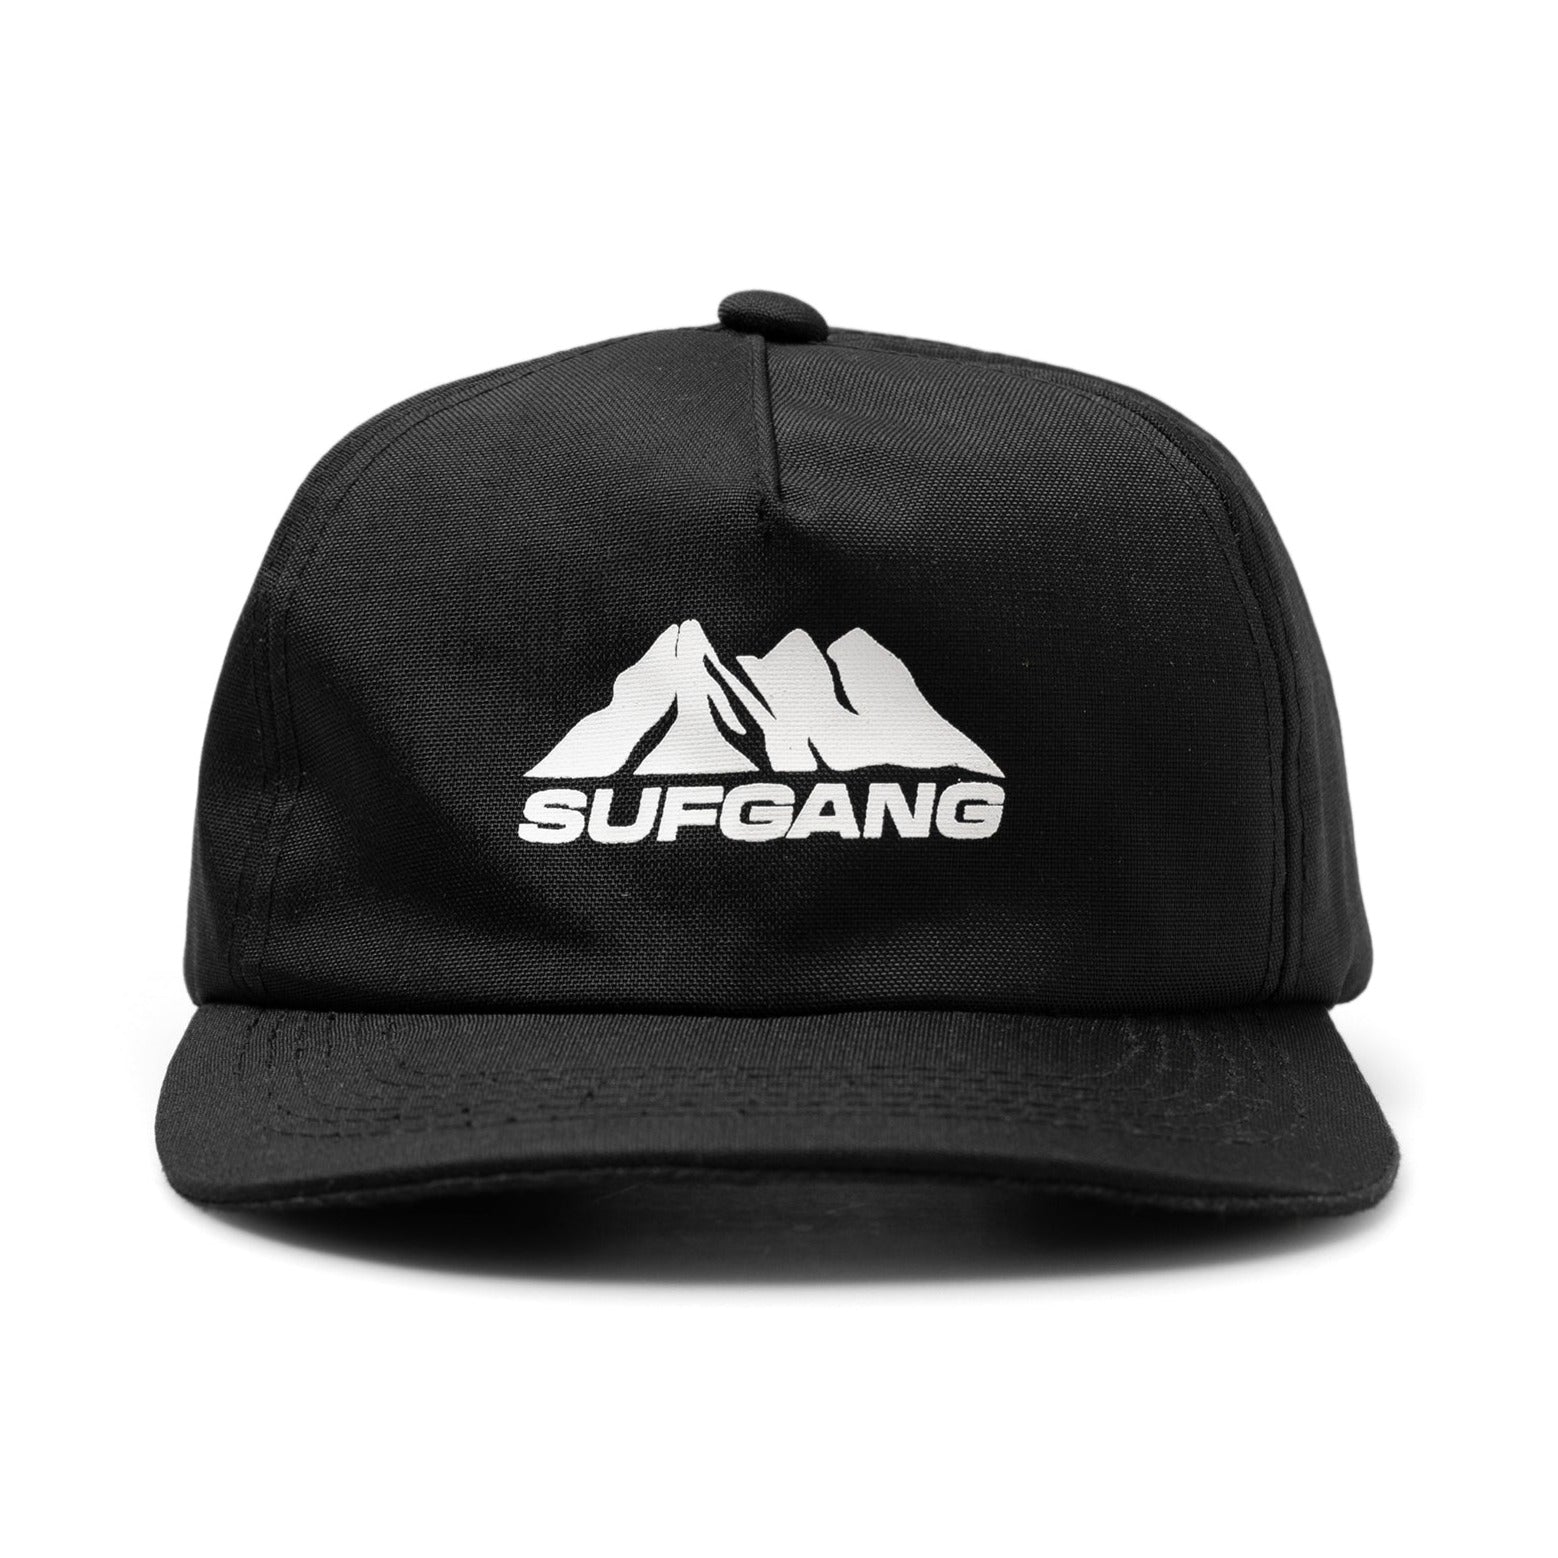 SUFGANG - Cordura Mountain Cap "Black" - THE GAME